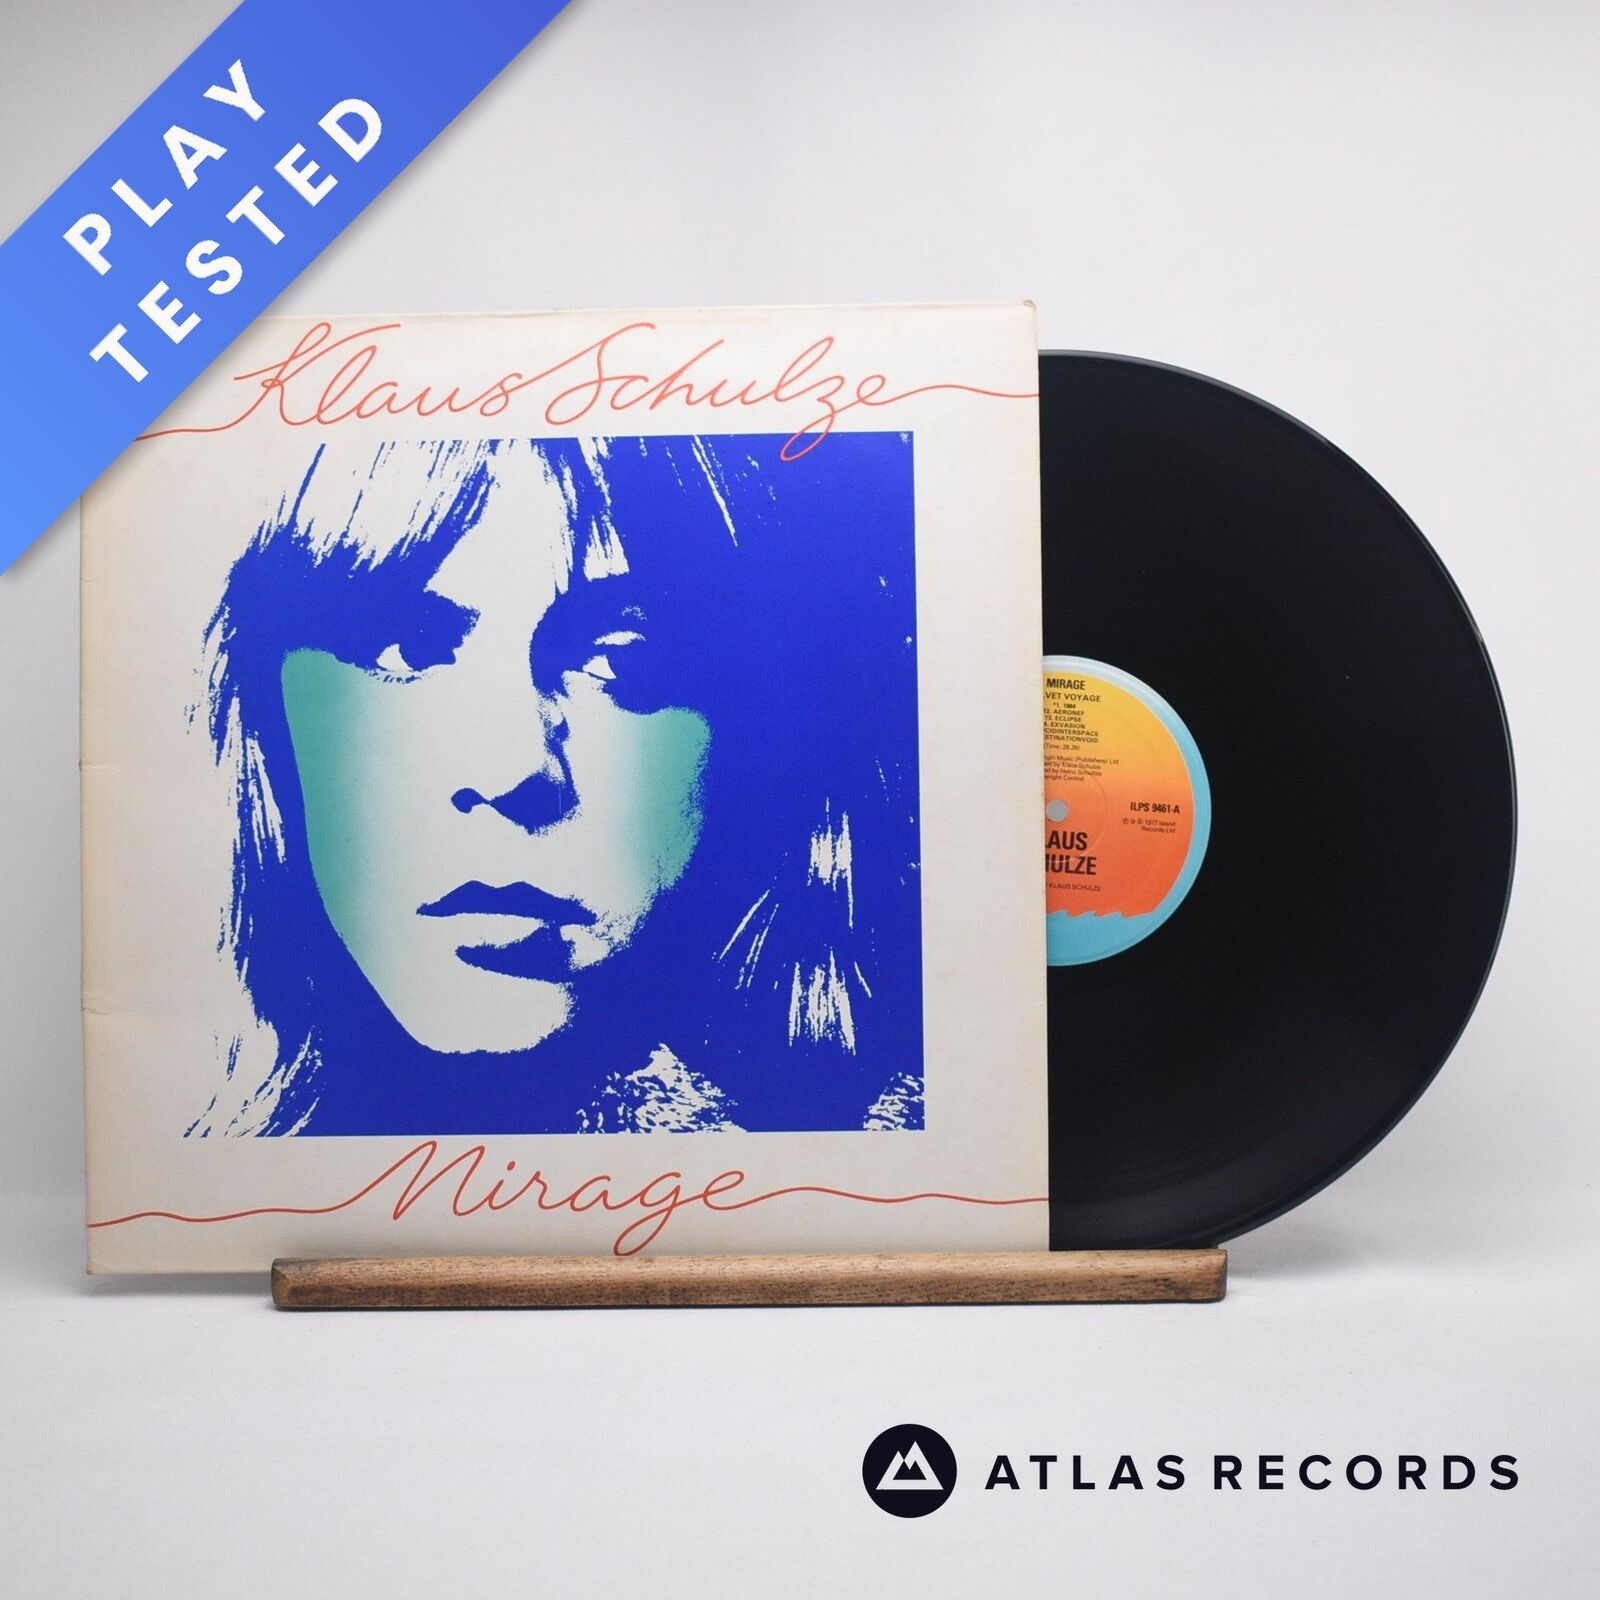 Klaus Schulze Mirage Gatefold LP Album Vinyl Record ILPS 9461 - VG+/VG+